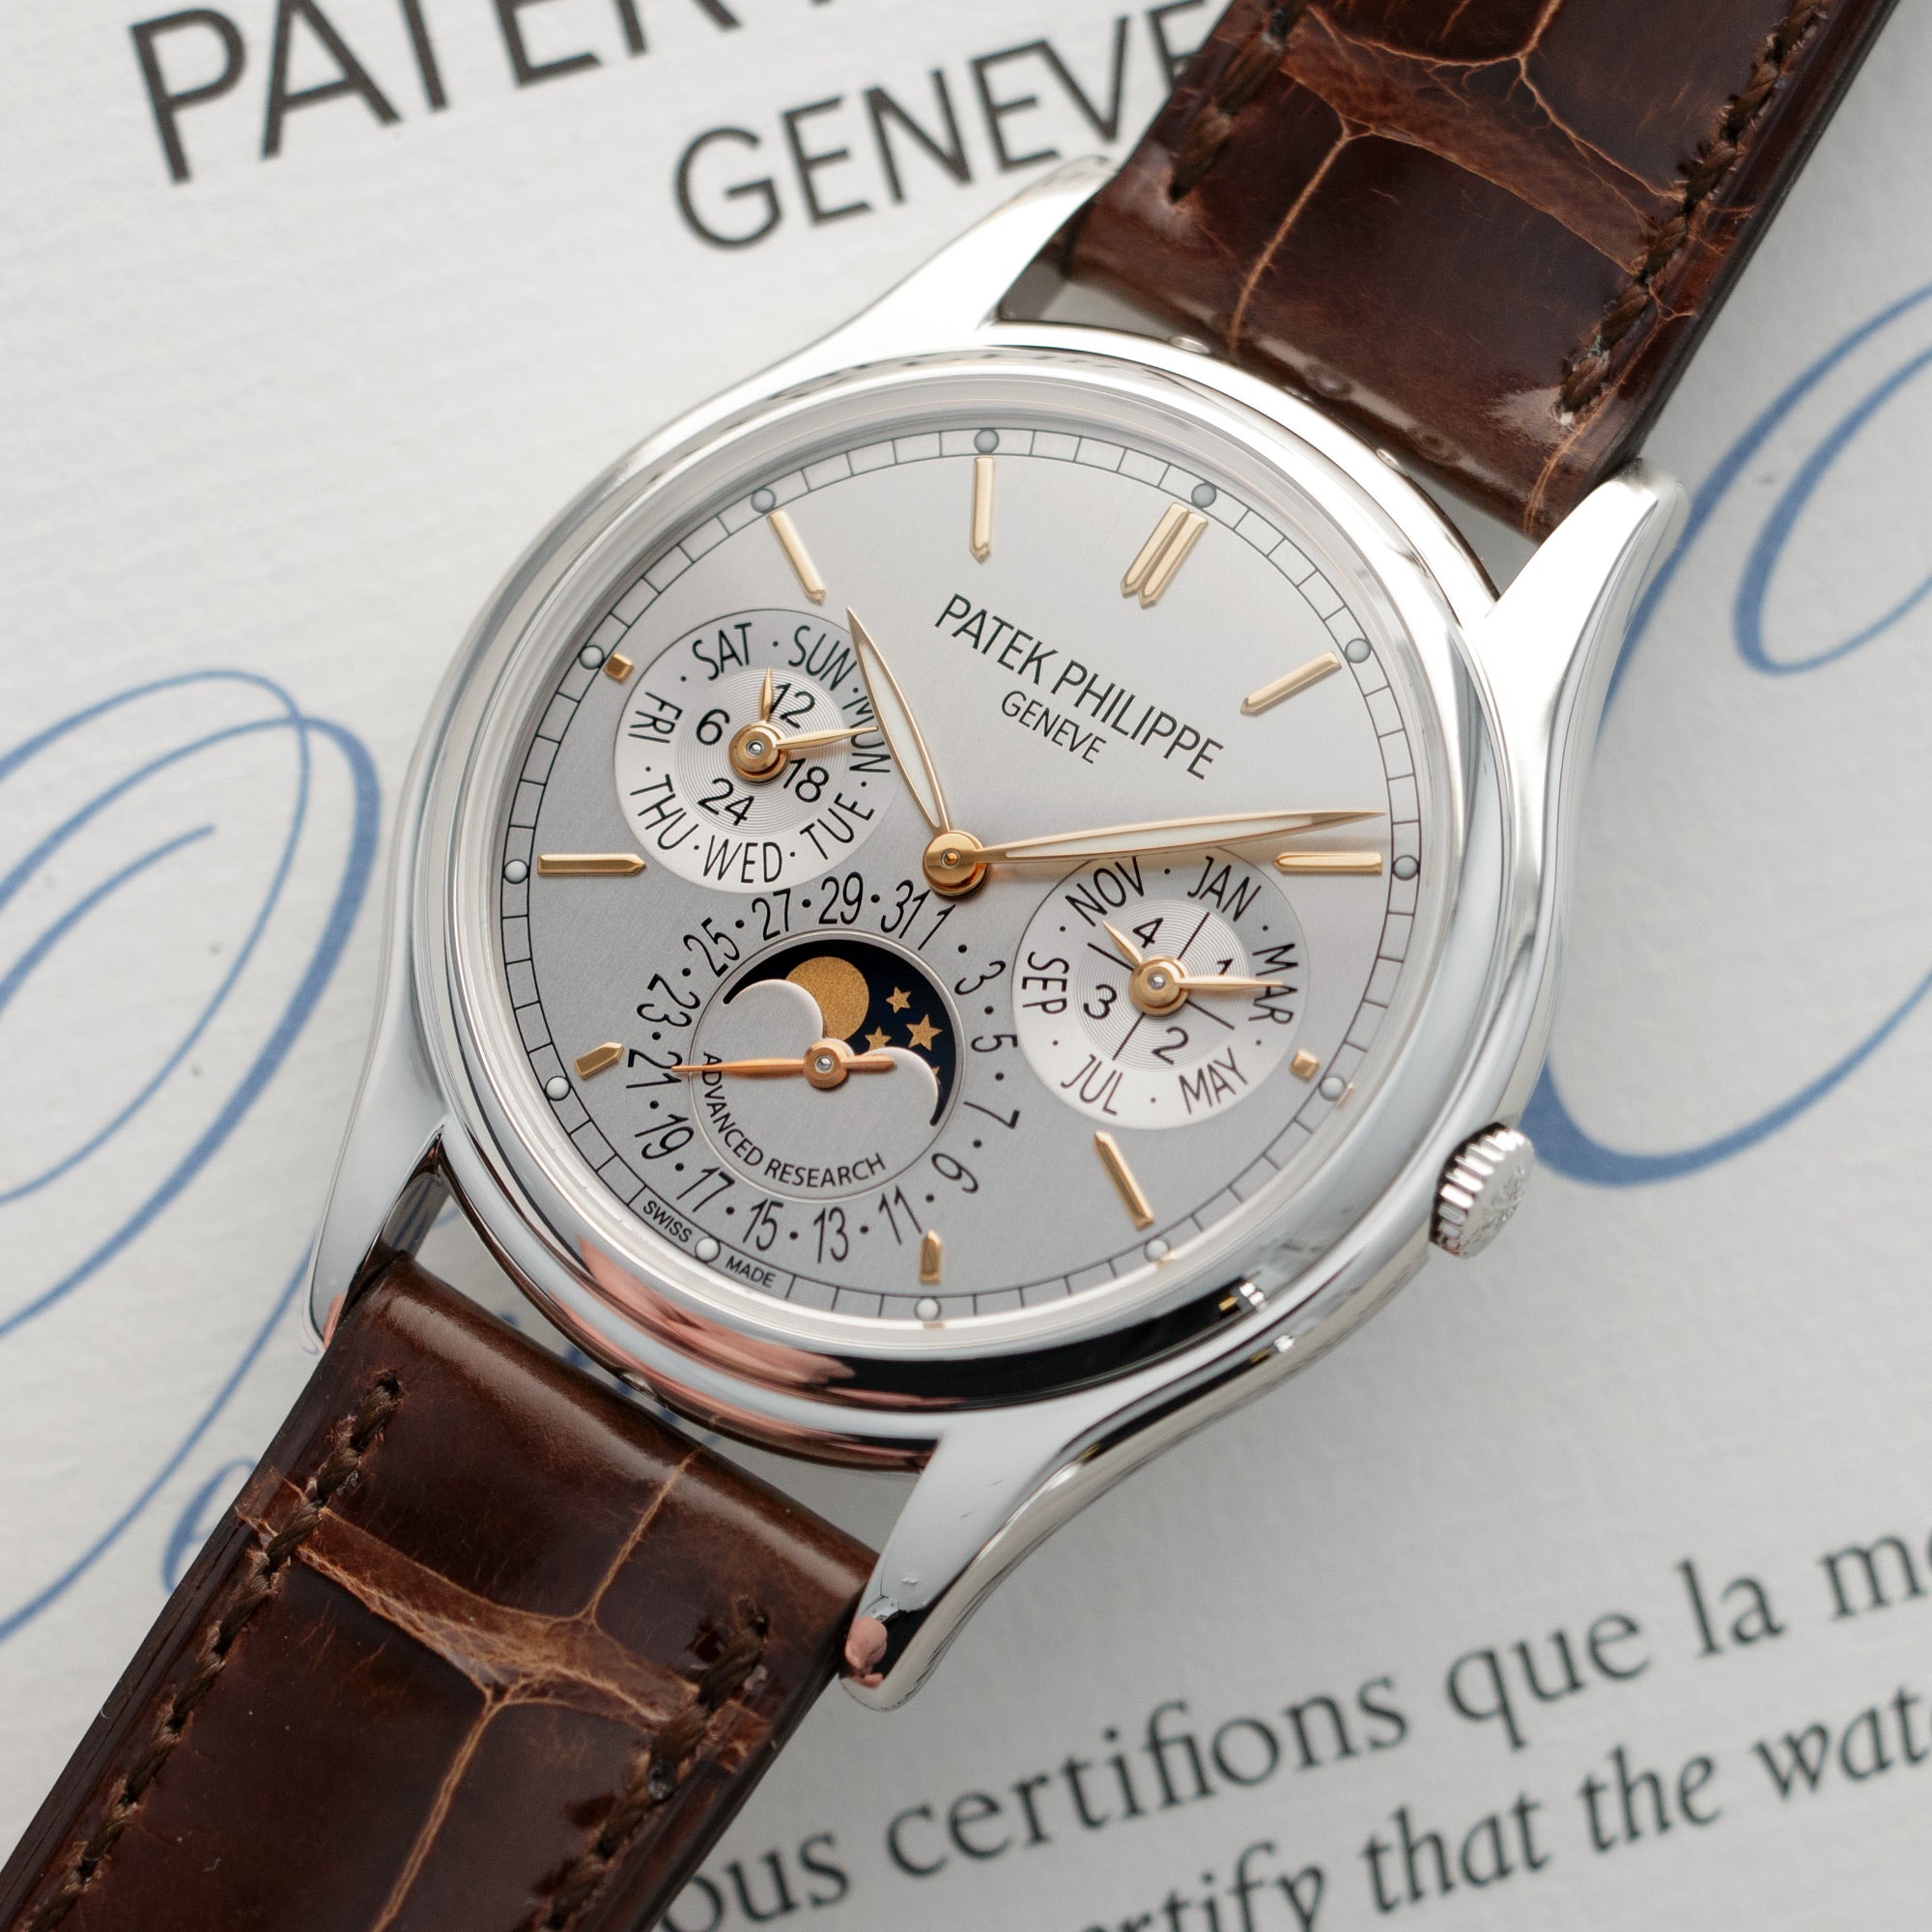 Patek Philippe - Patek Philippe Platinum Perpetual Calendar Advanced Research Watch Ref. 5550 - The Keystone Watches